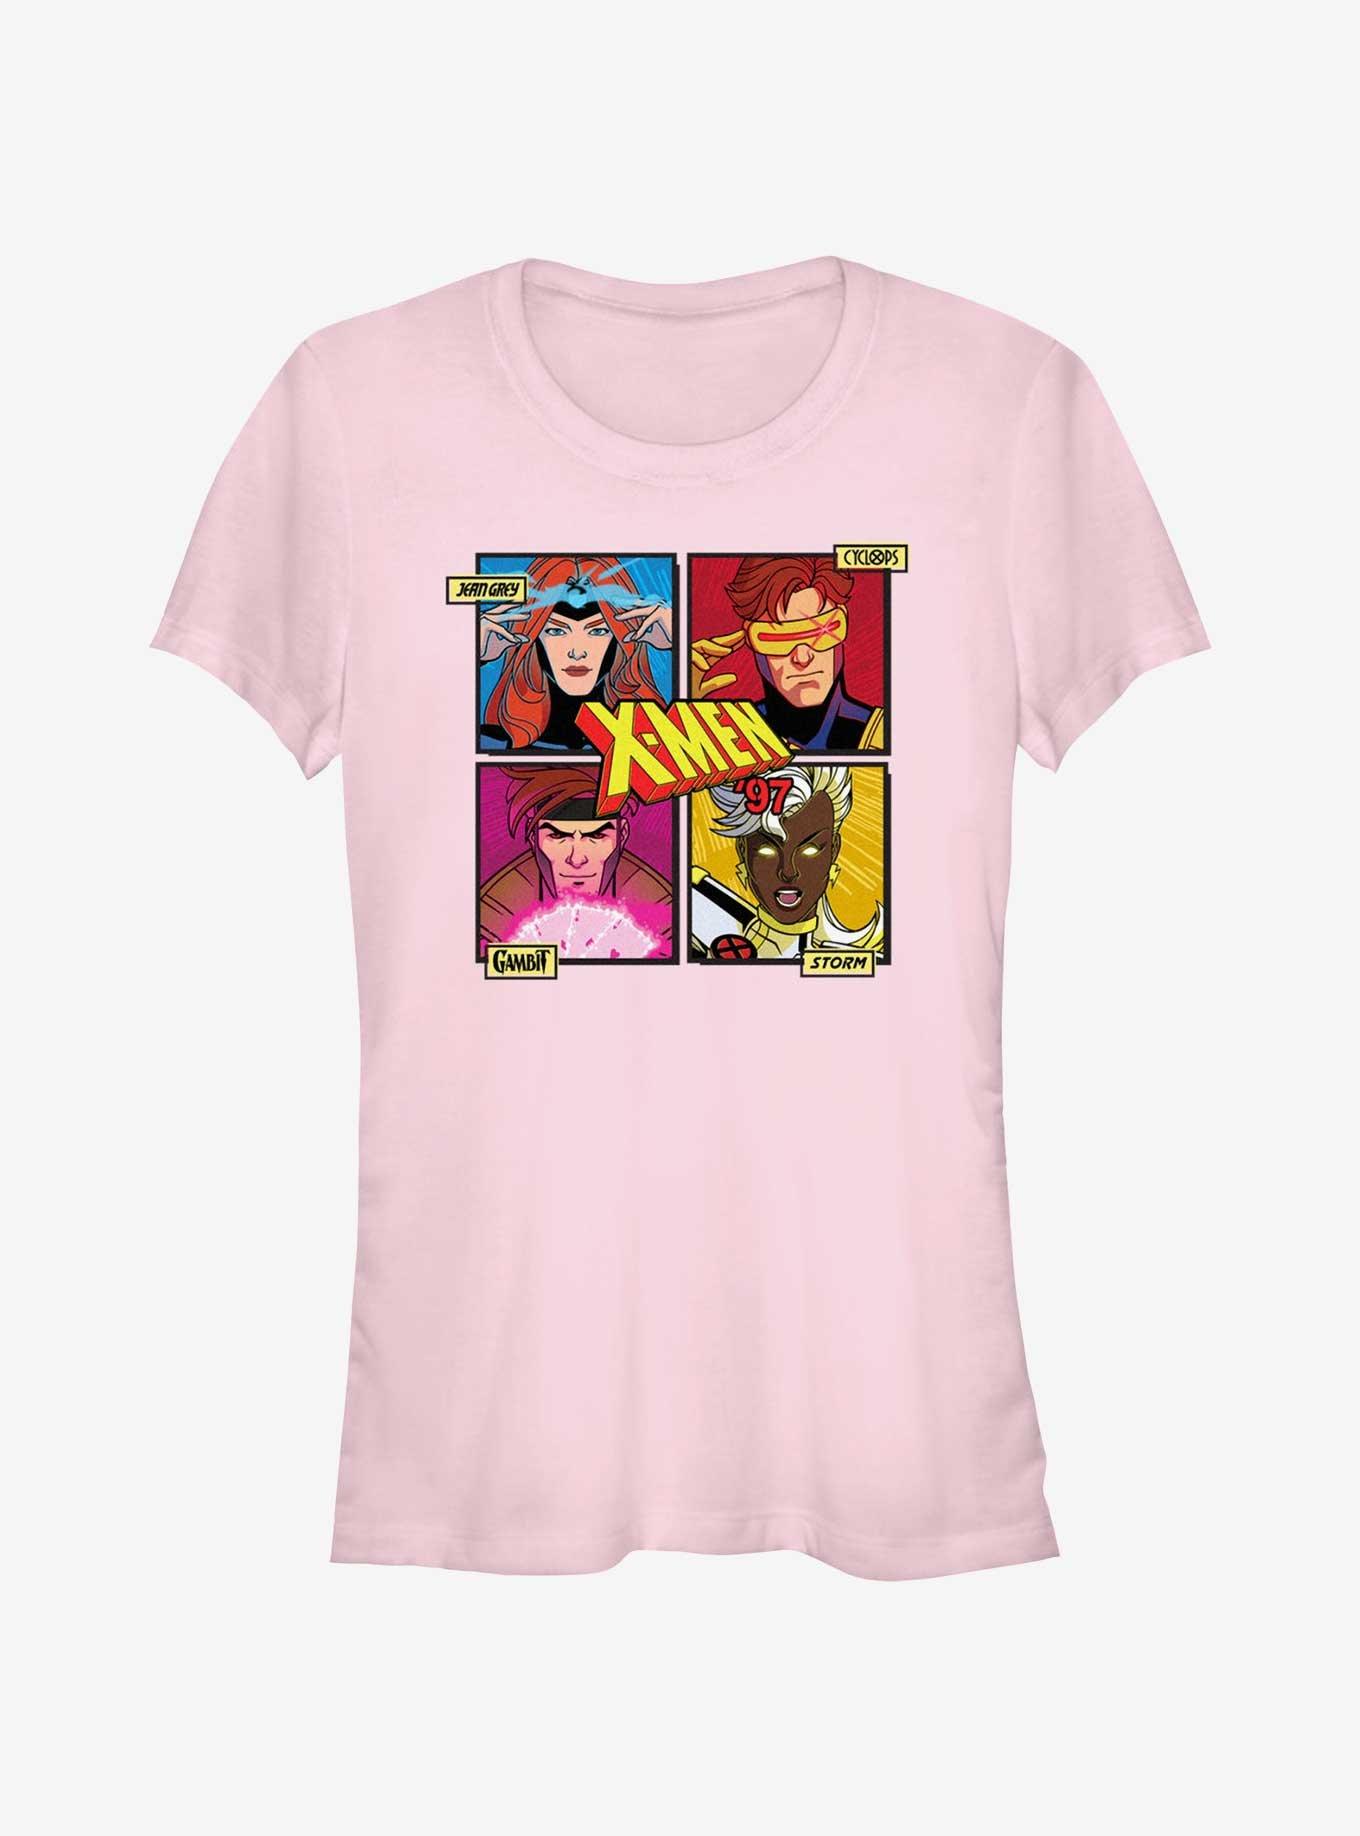 Marvel X-Men '97 Jean Cyclops Cambit Storm Girls T-Shirt, LIGHT PINK, hi-res